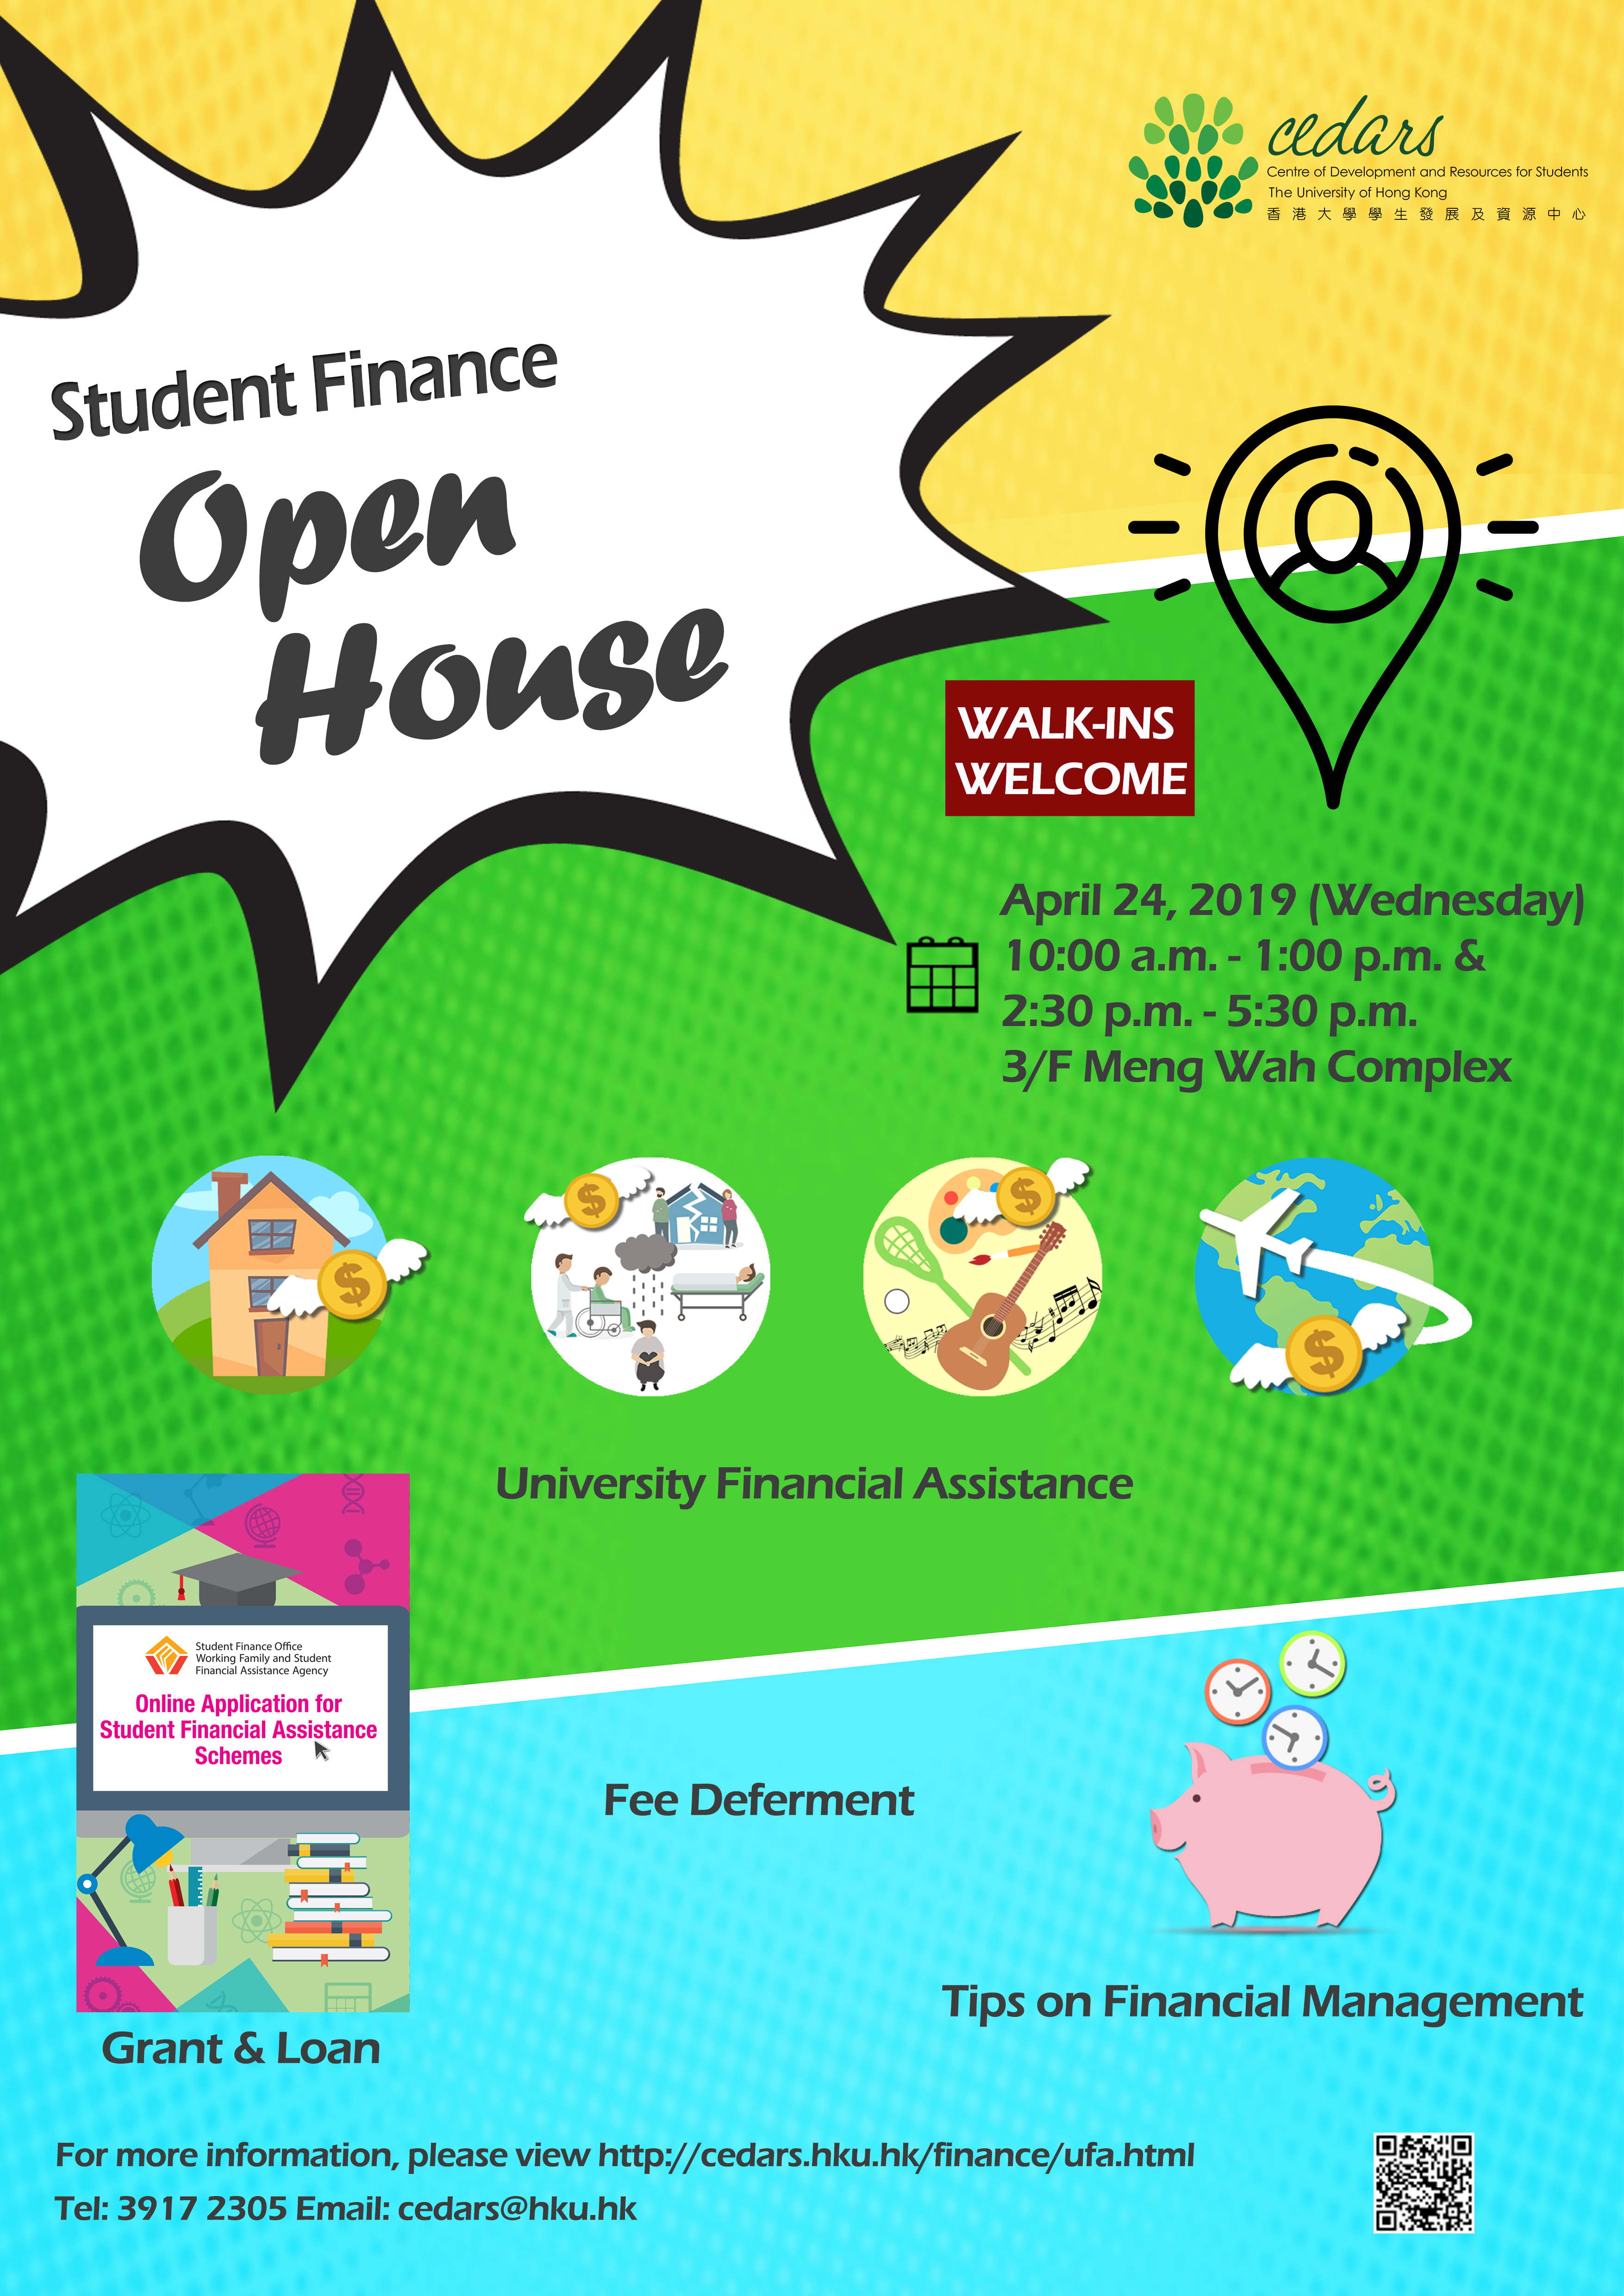 Student Finance - OPEN HOUSE